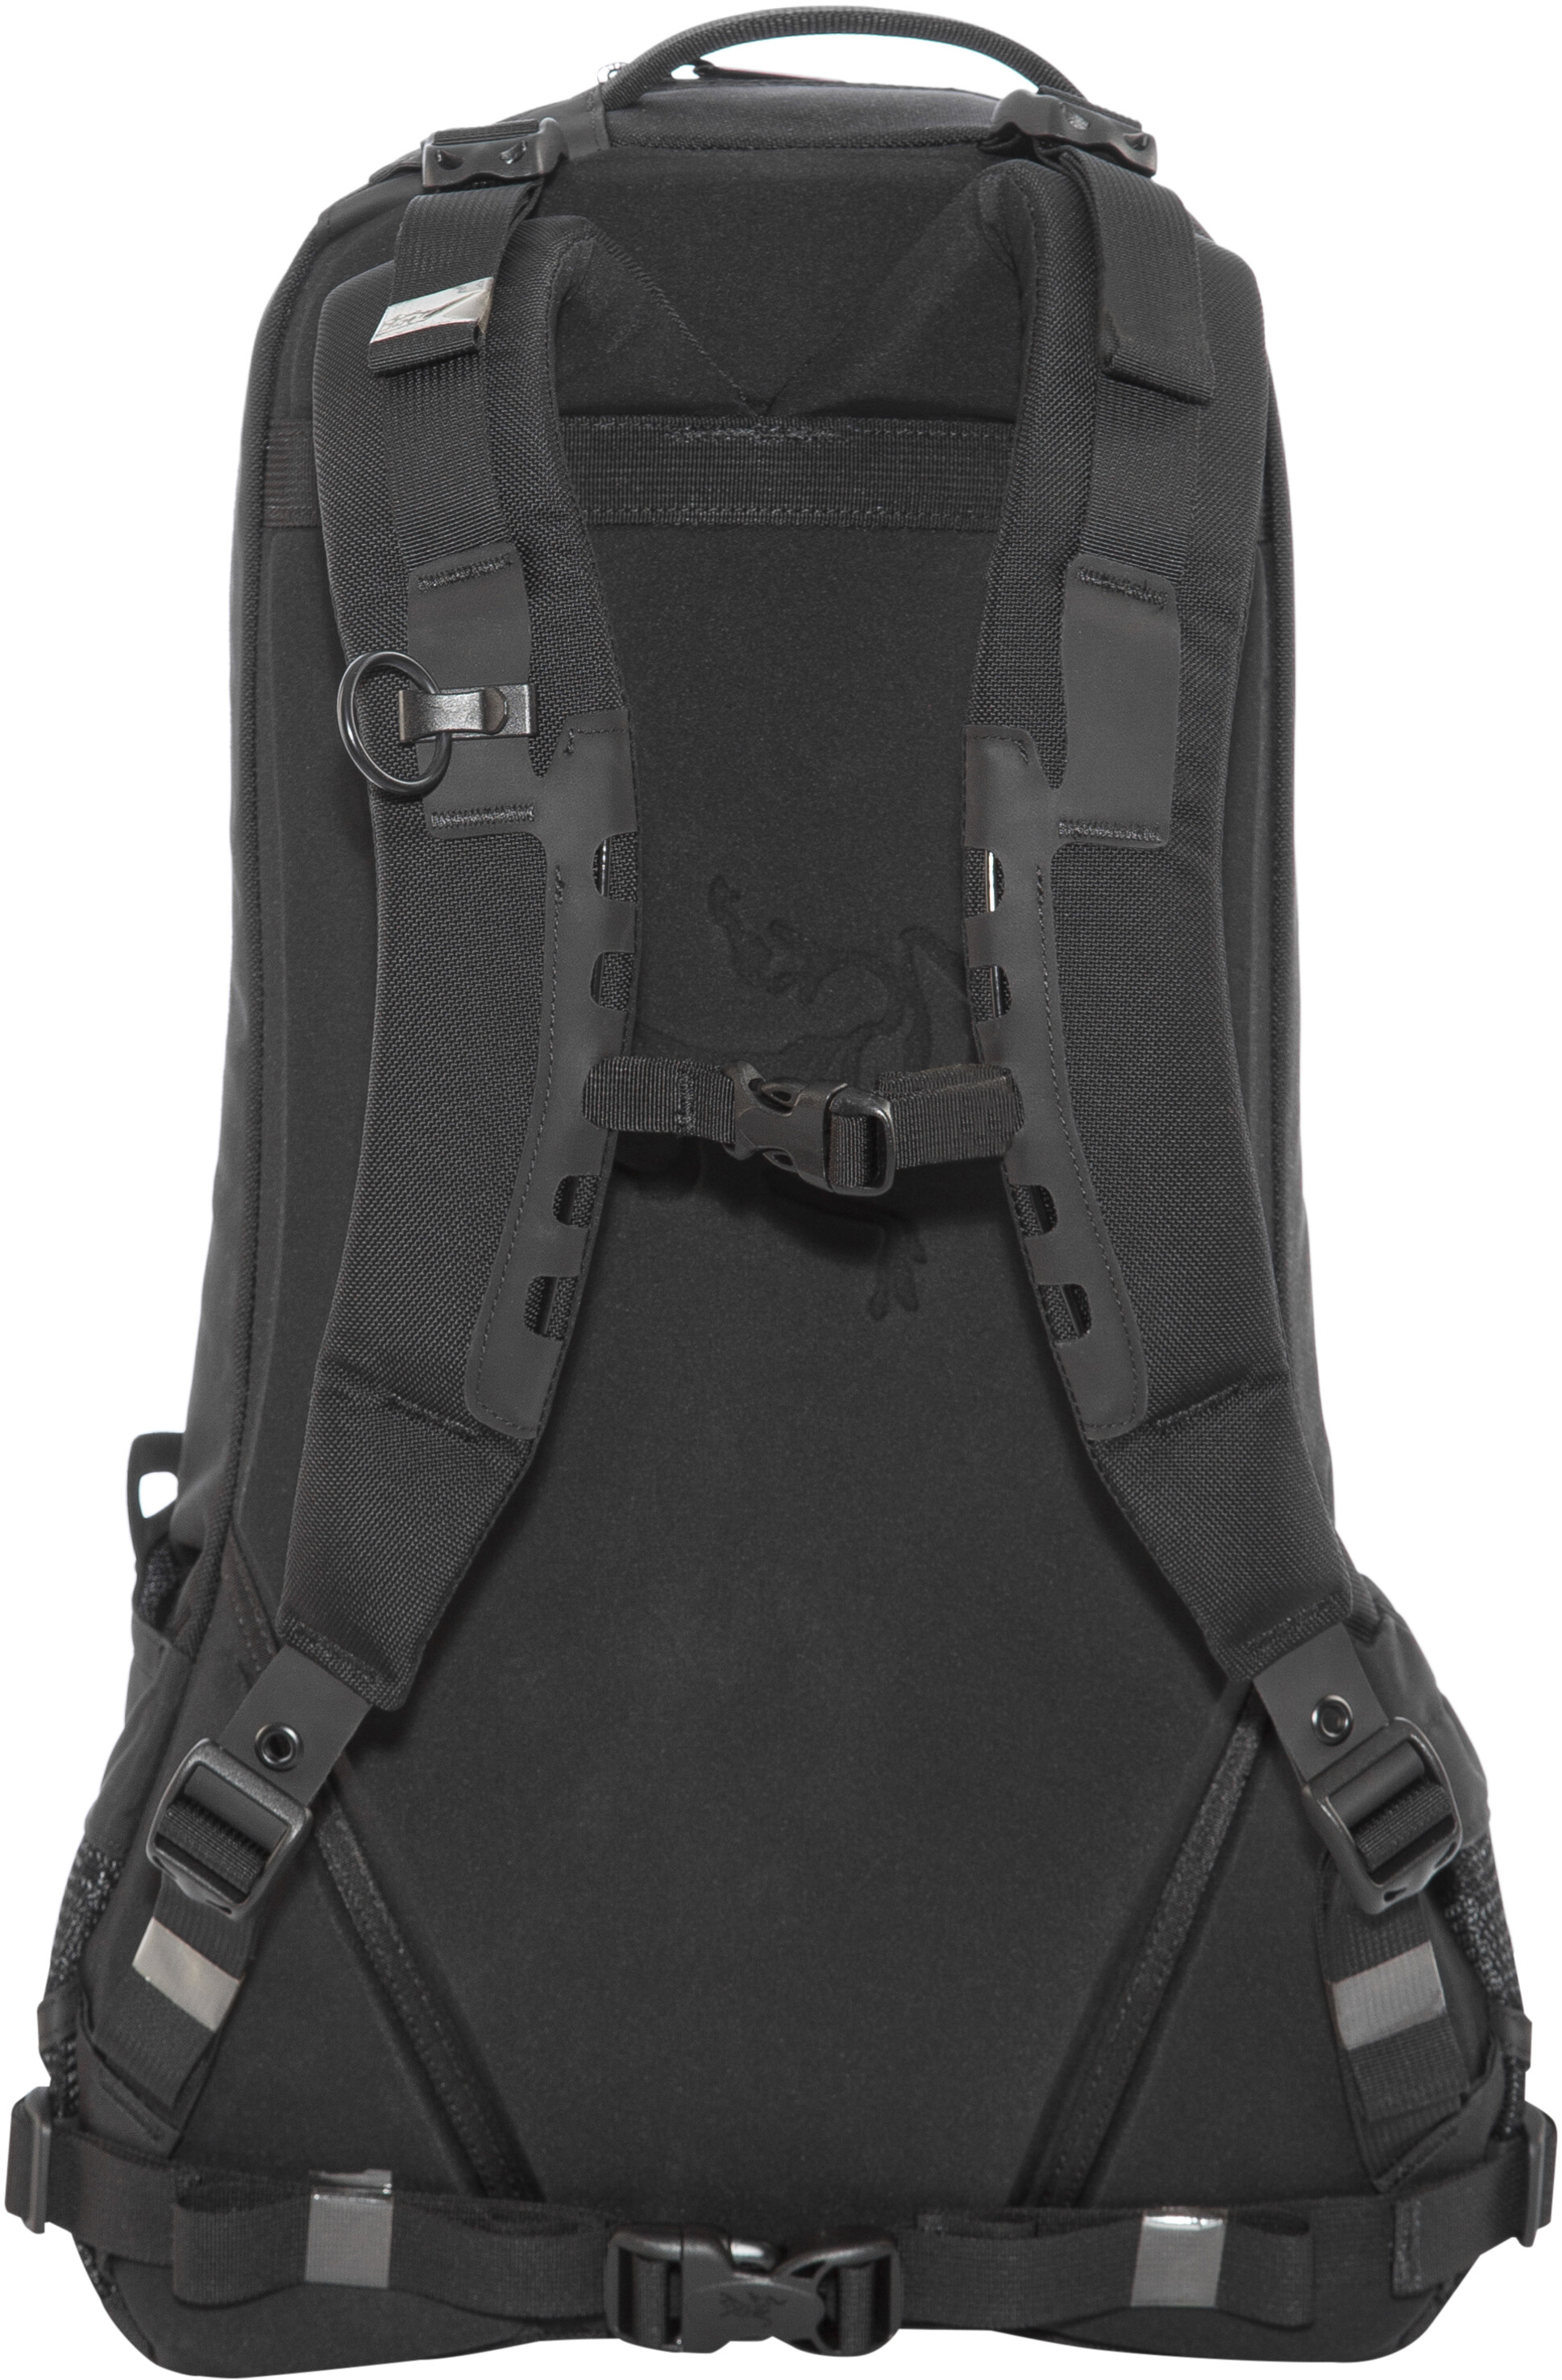 Arc'teryx Arro 22 Backpack Black/Rigel online kaufen | fahrrad.de